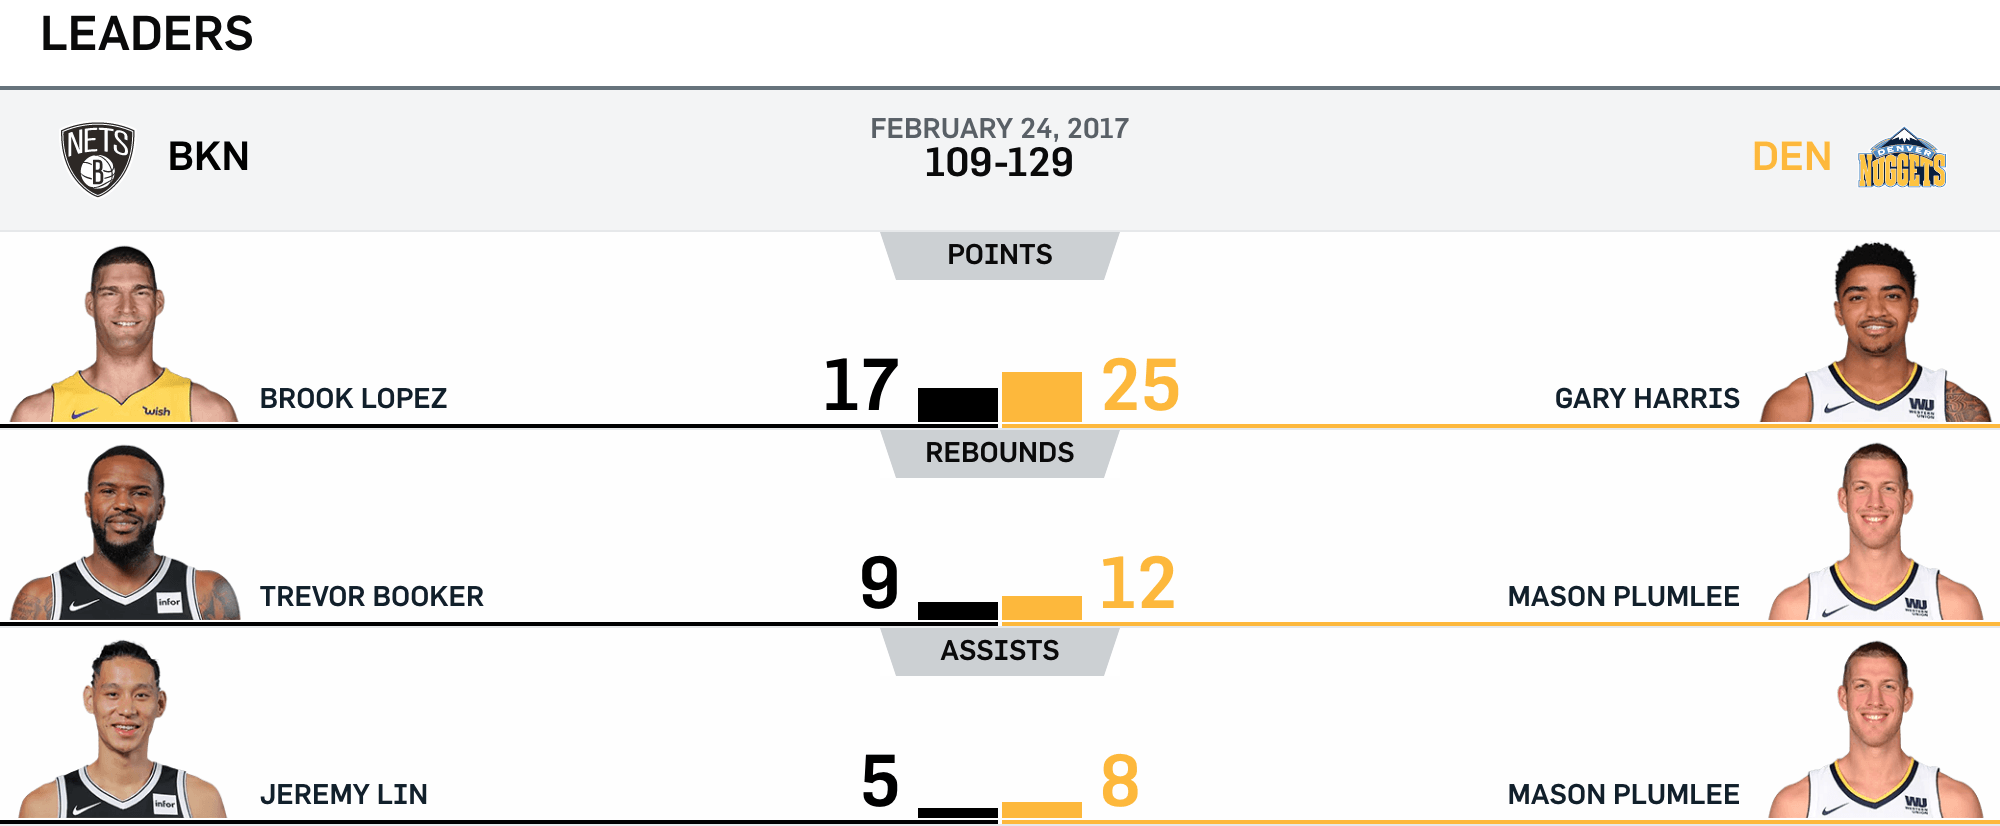 Nets vs Nuggets 2/24/17 Leaders